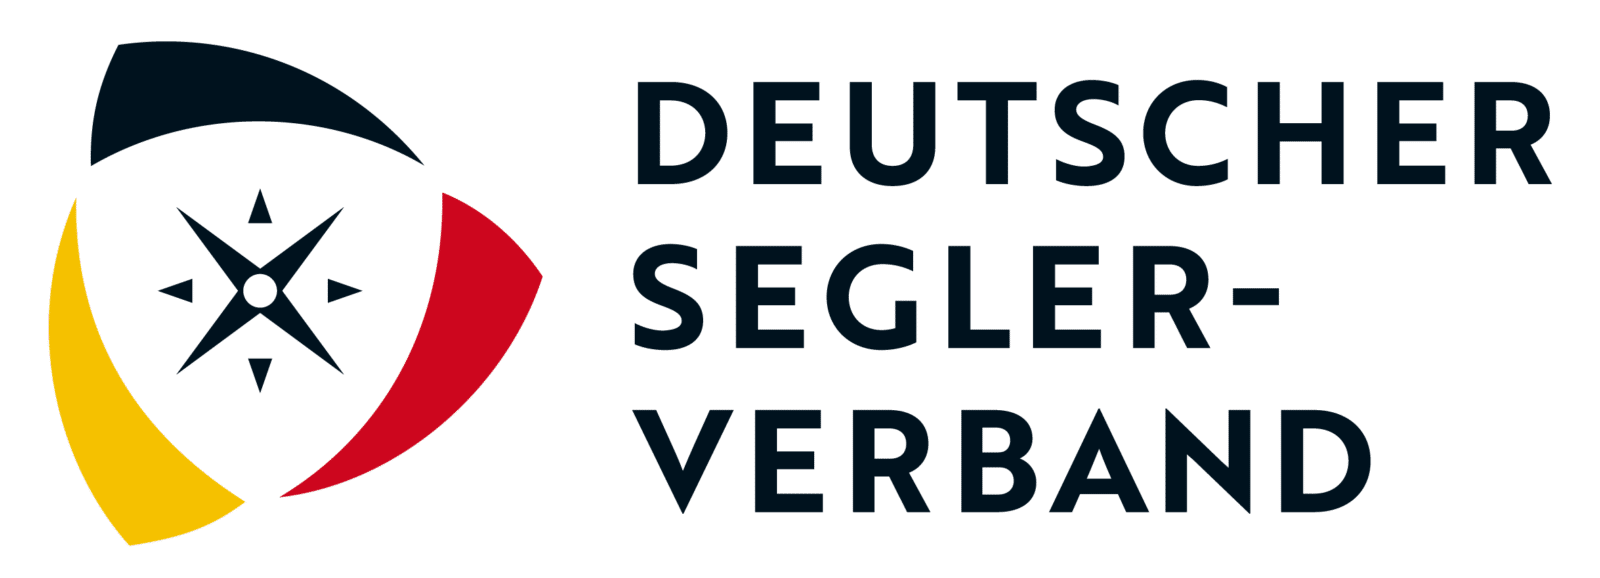 deutscher-segler-verband-logo.png